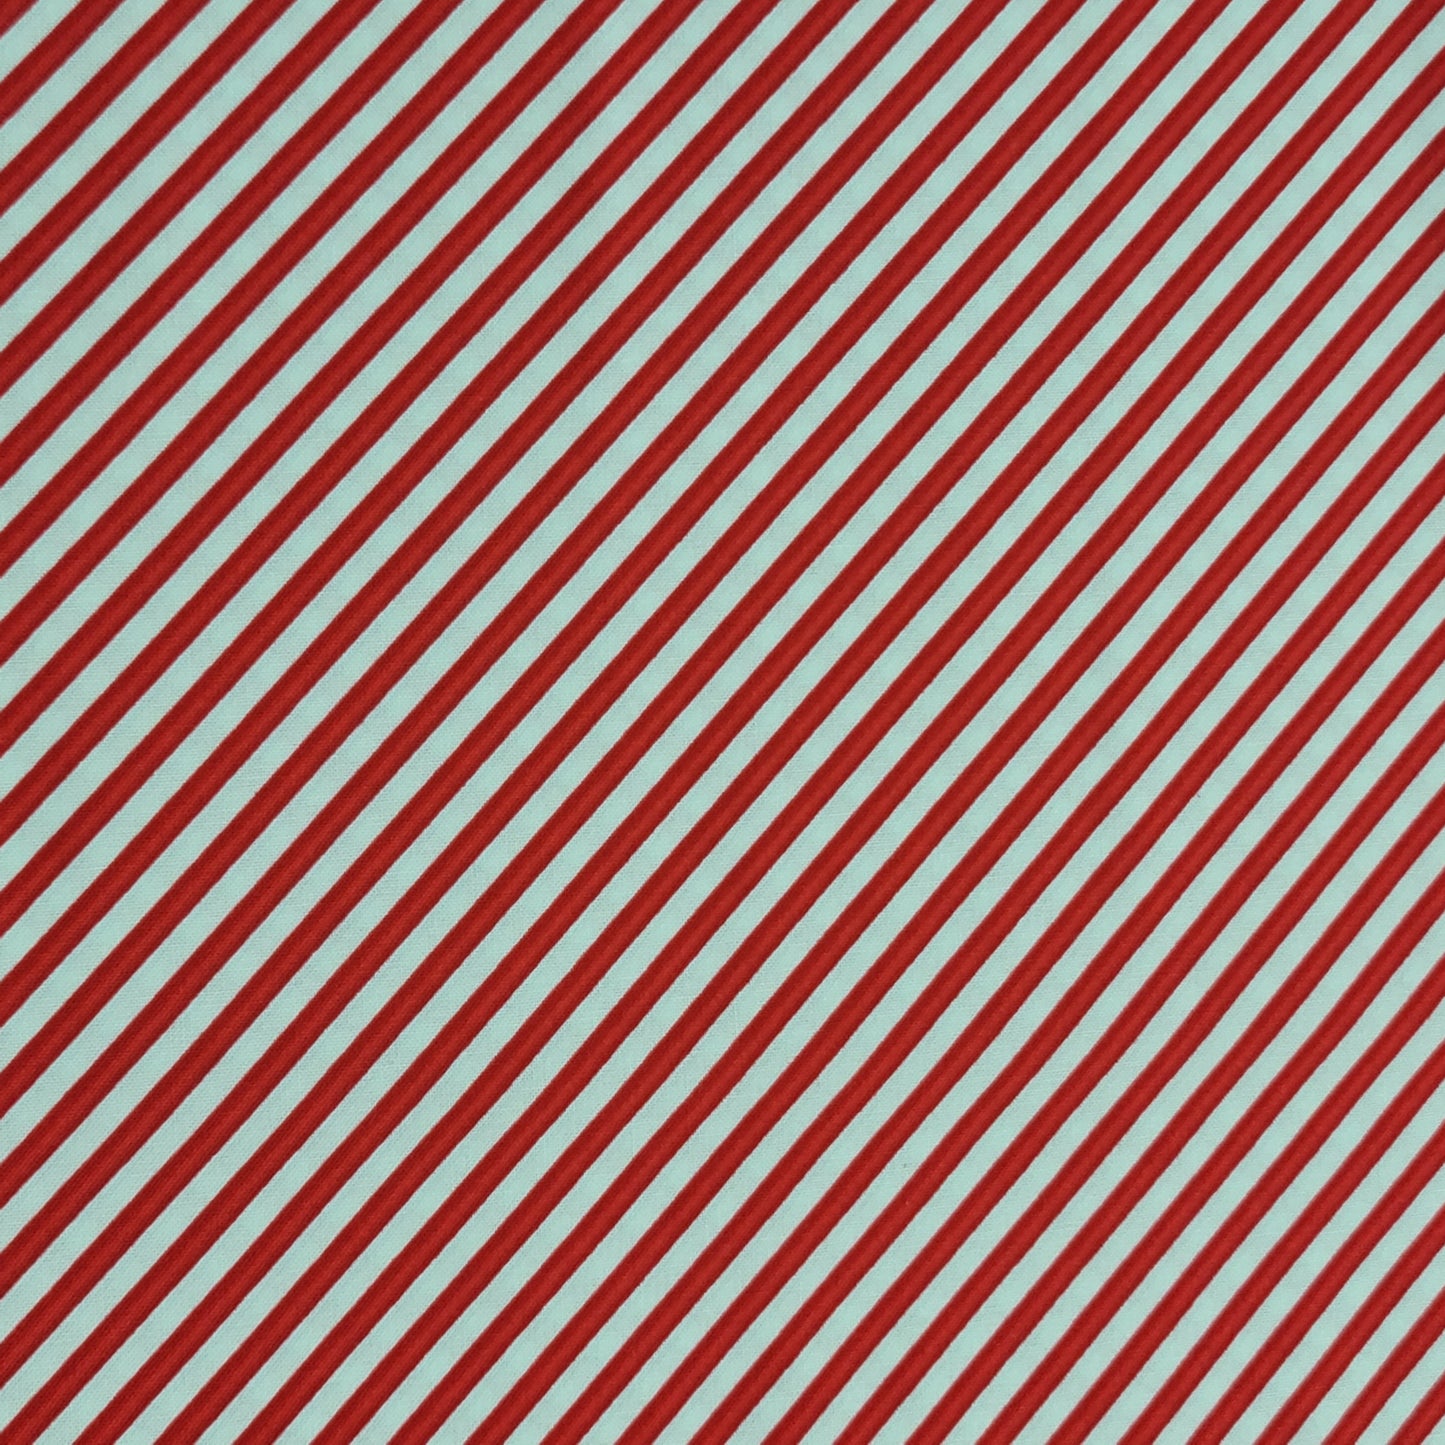 Tejido rayas diagonales rojo y blanco. Timber Gnomies Tree Farm